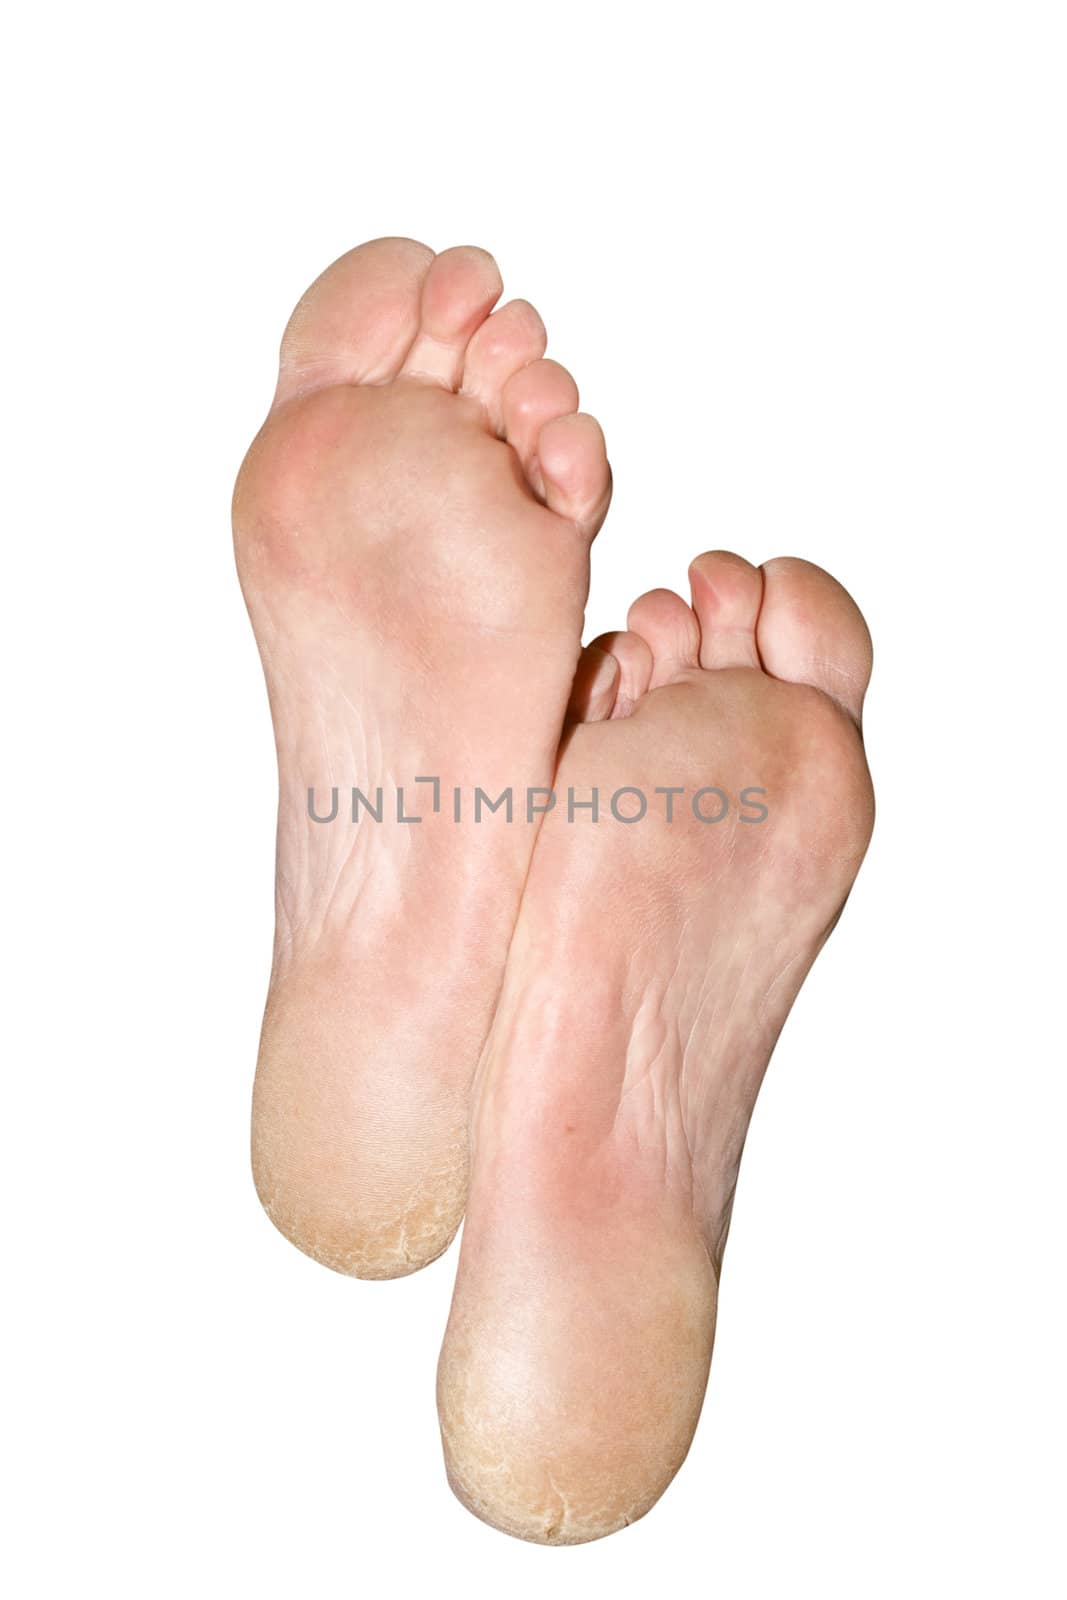 The large feet by petrkurgan